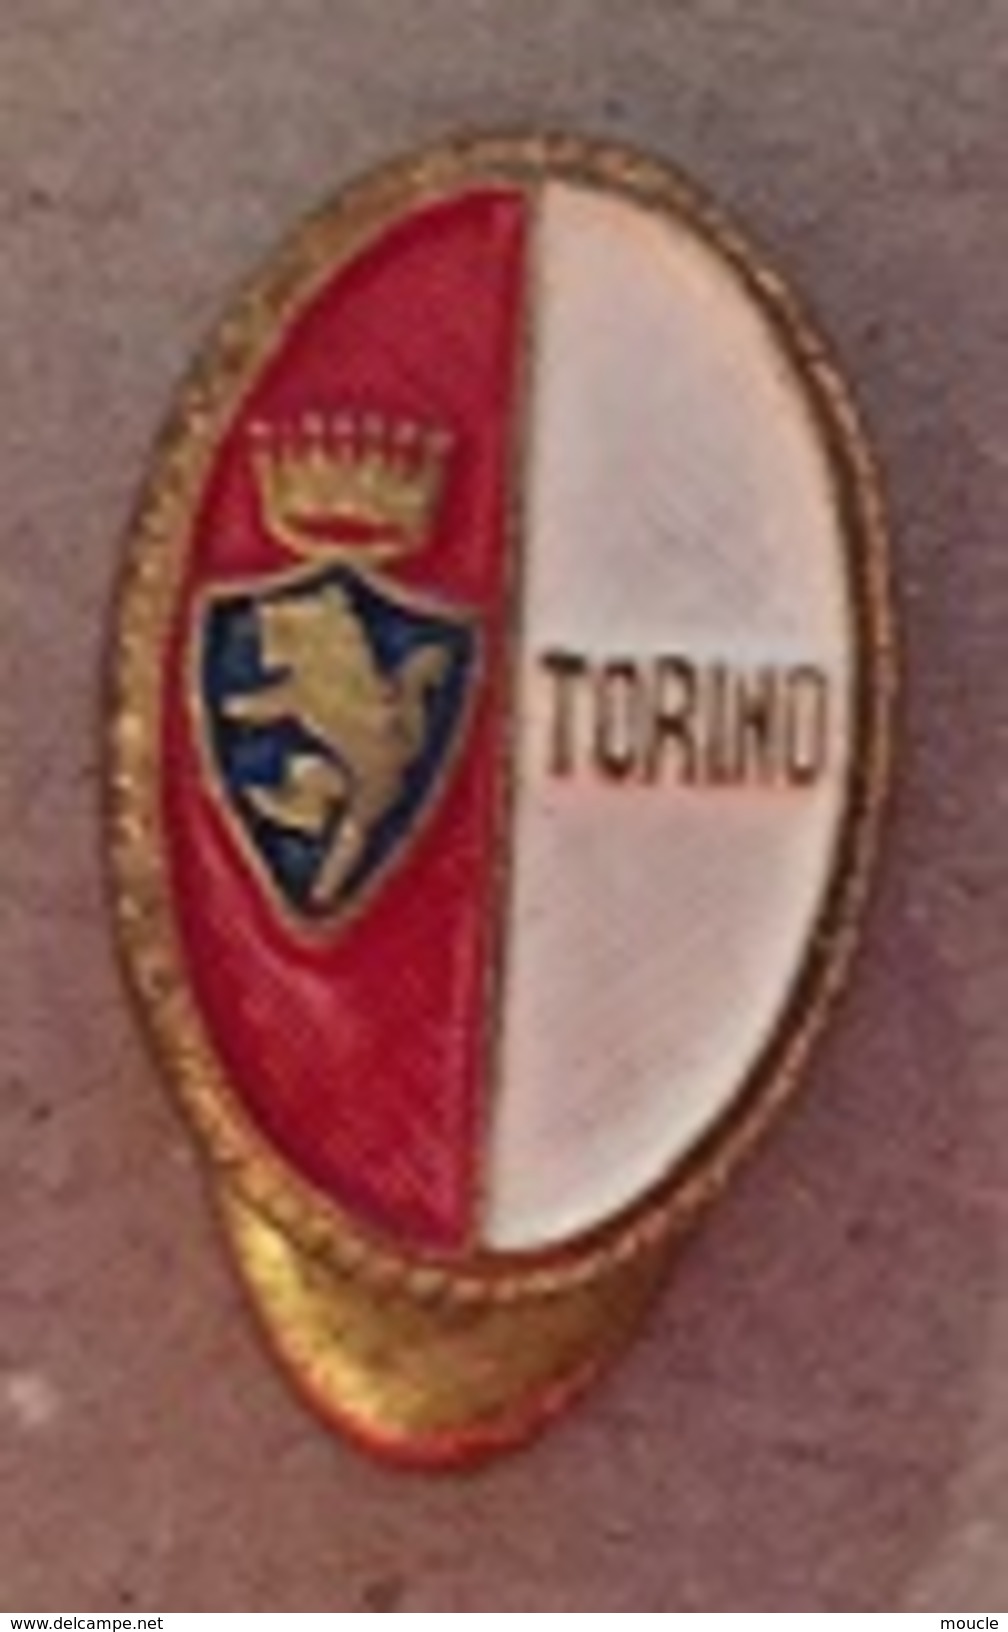 BOUTONNIERE - FOOTBALL - FOOT - SOCCER - FUTBOL - CACIO - TORINO - TURIN - ITALIA - ITALIE - TORO - TAUREAU - Fútbol